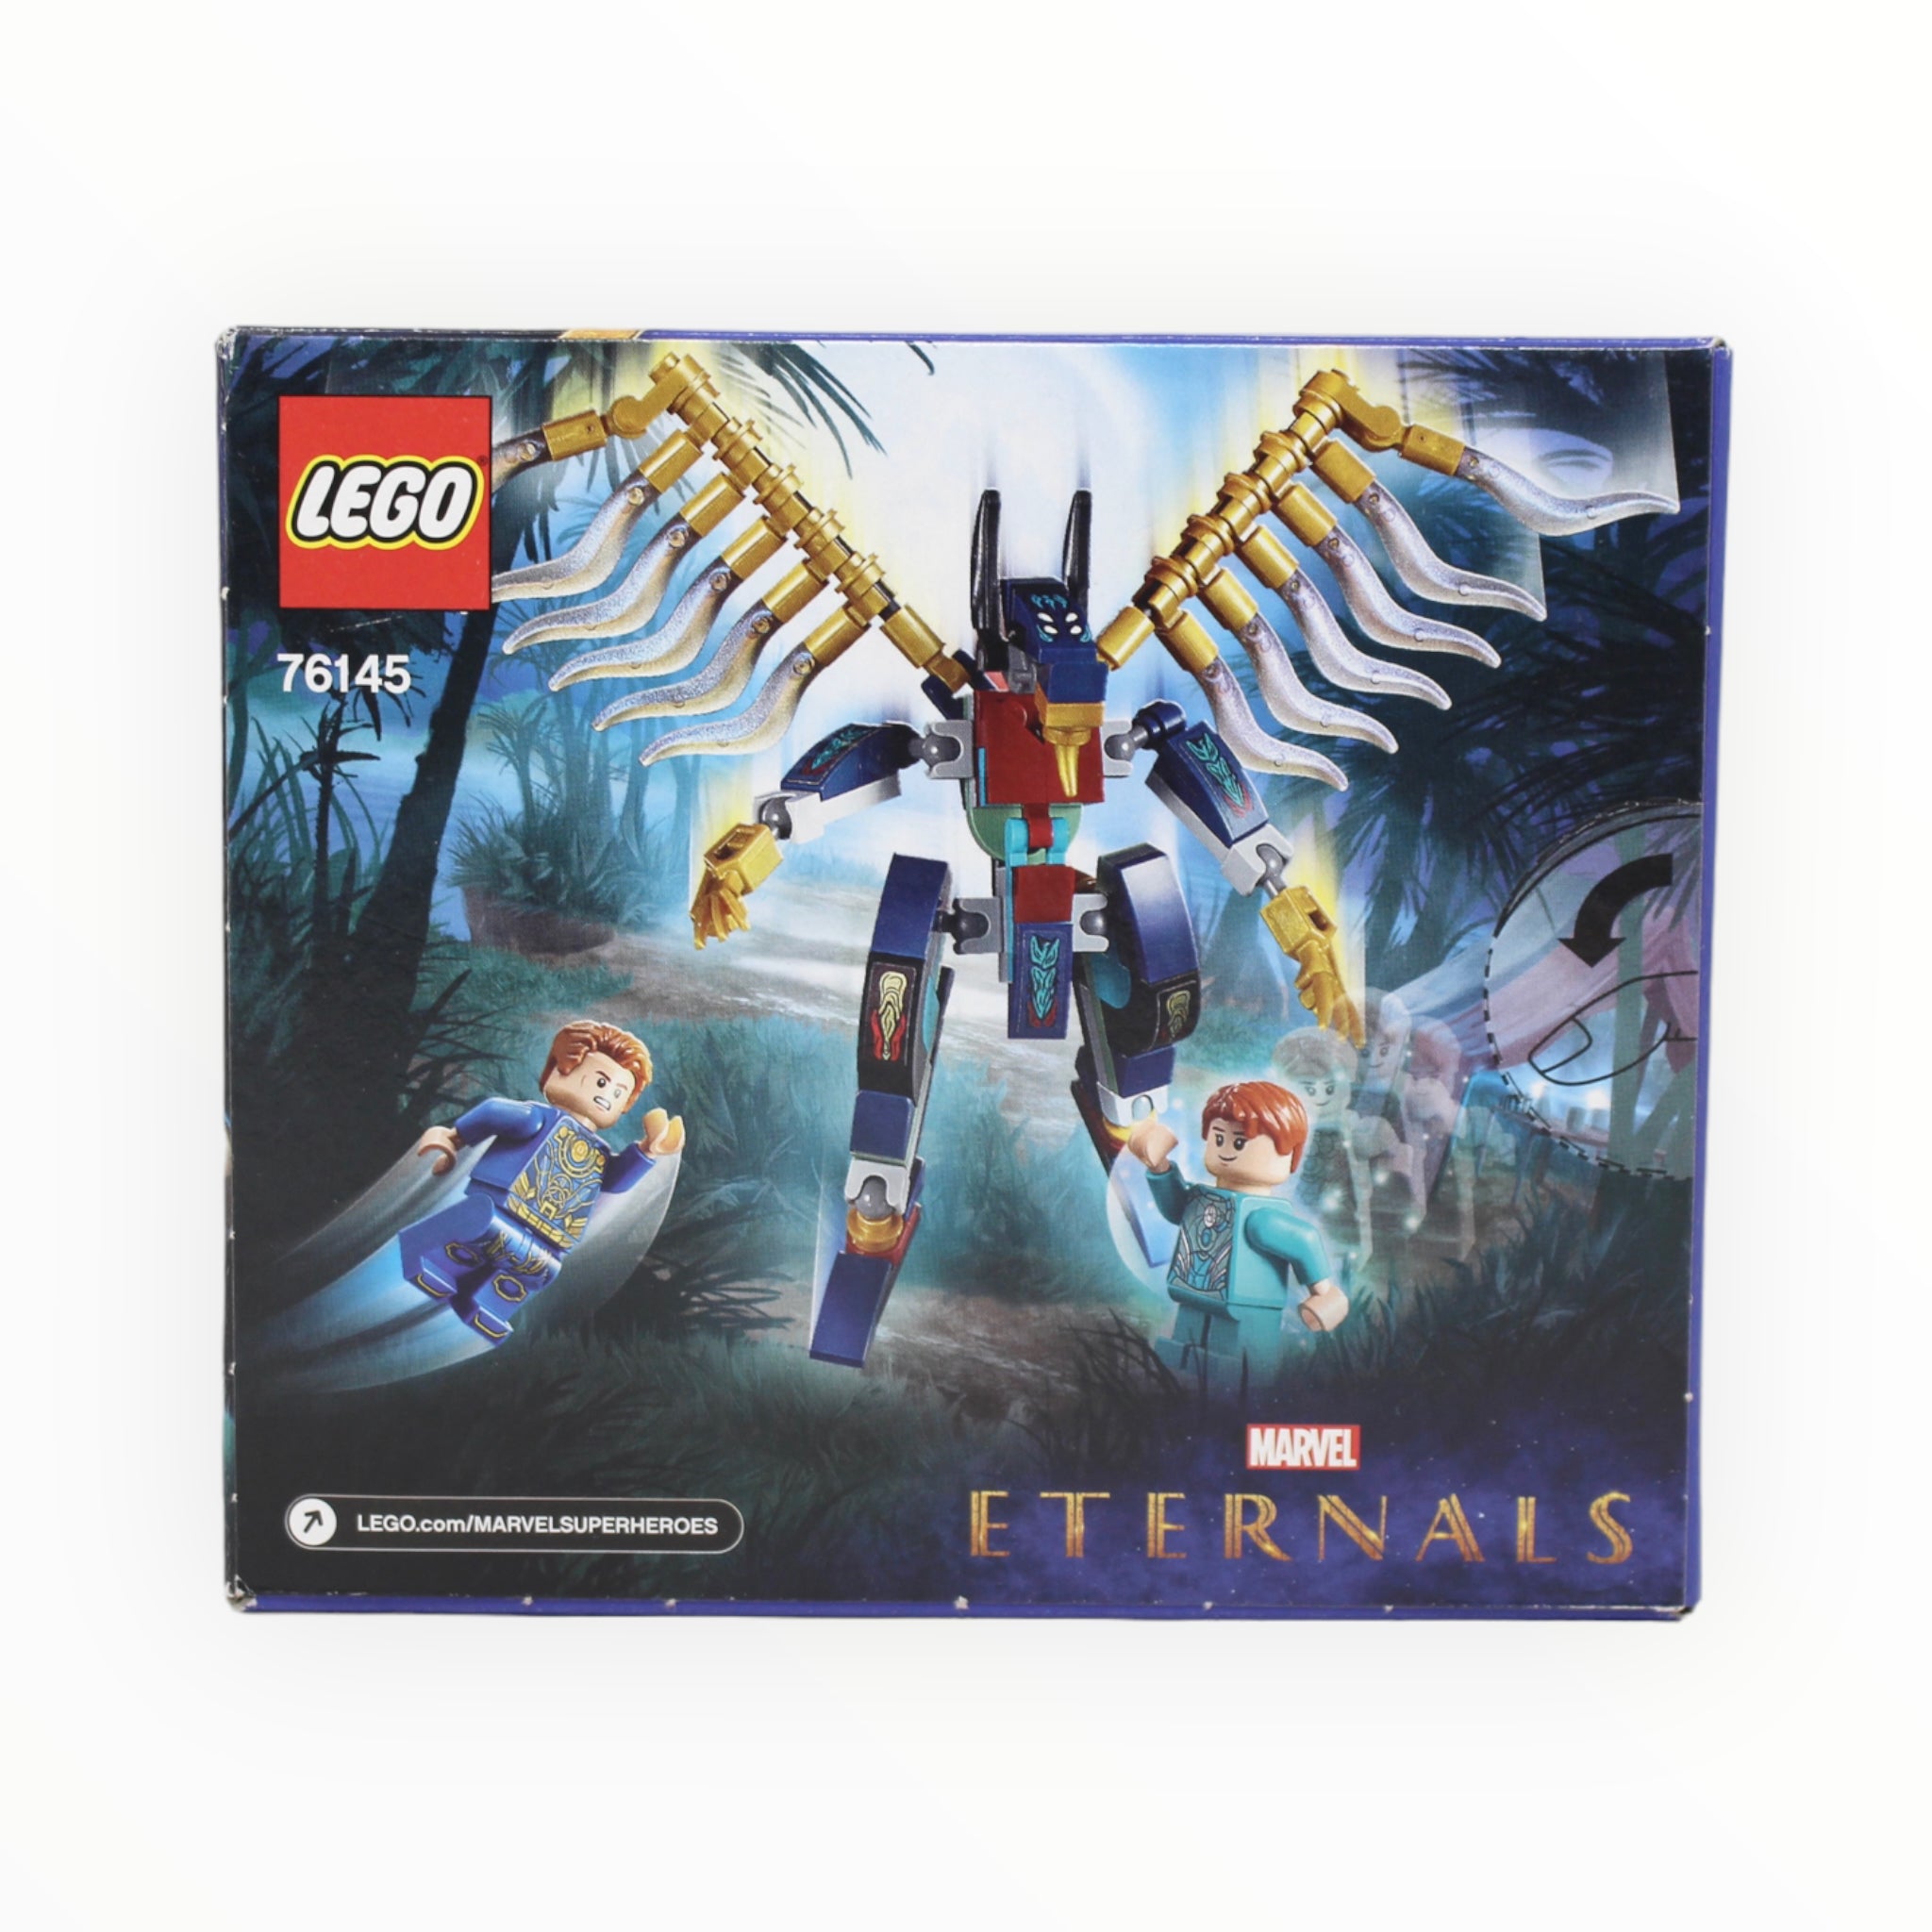 Retired Set 76145 Marvel Eternals’ Aerial Assault